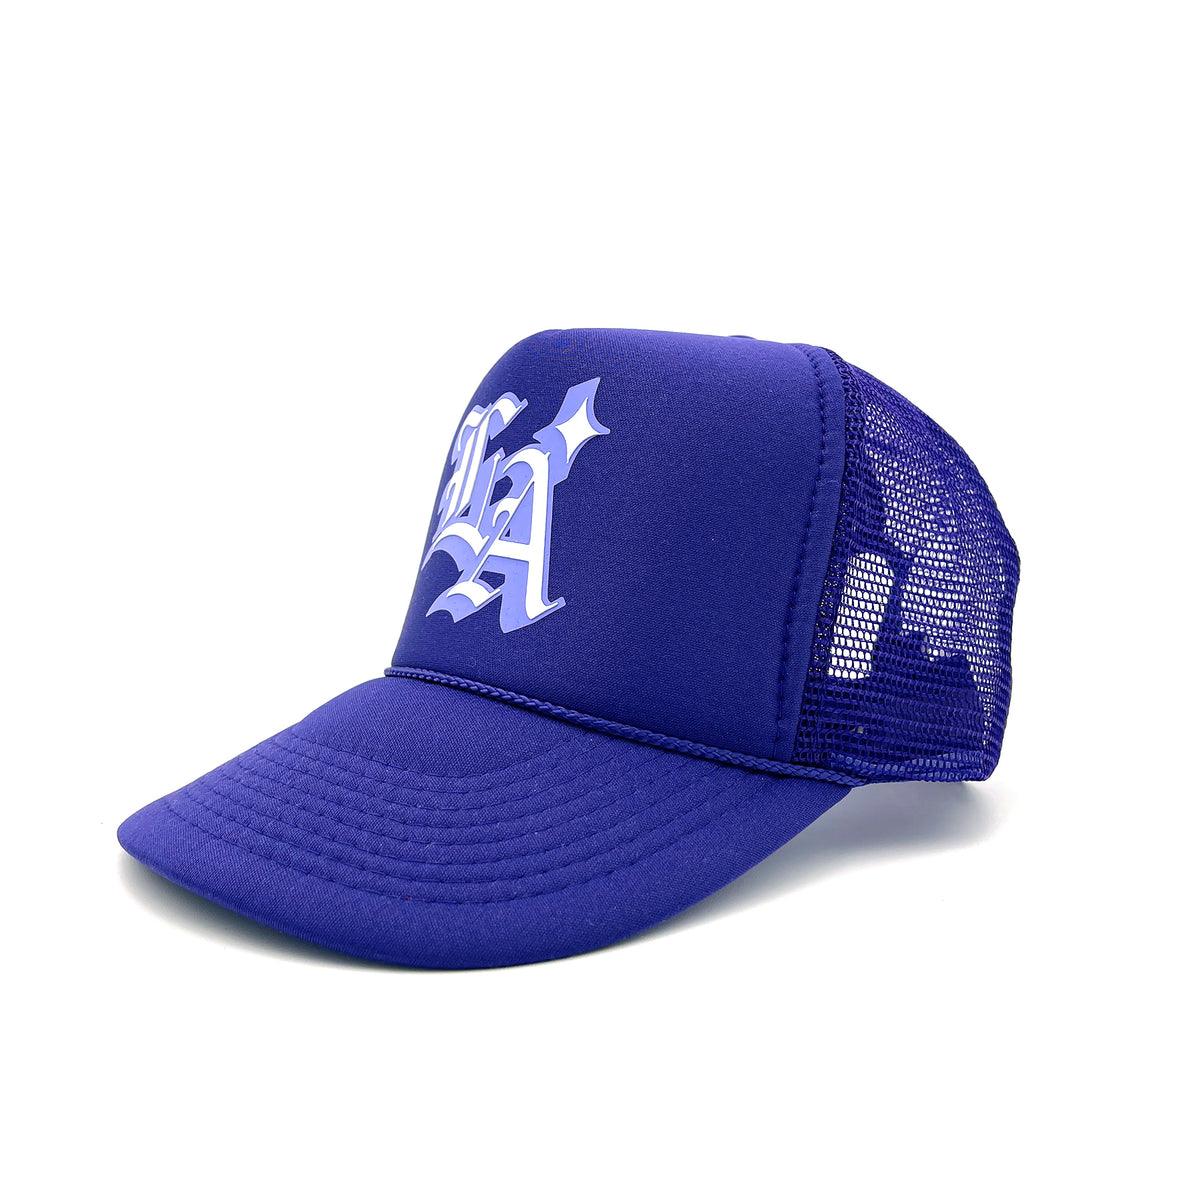 OG L.A. Trucker Hat (Purple/Gold) – Product of LA